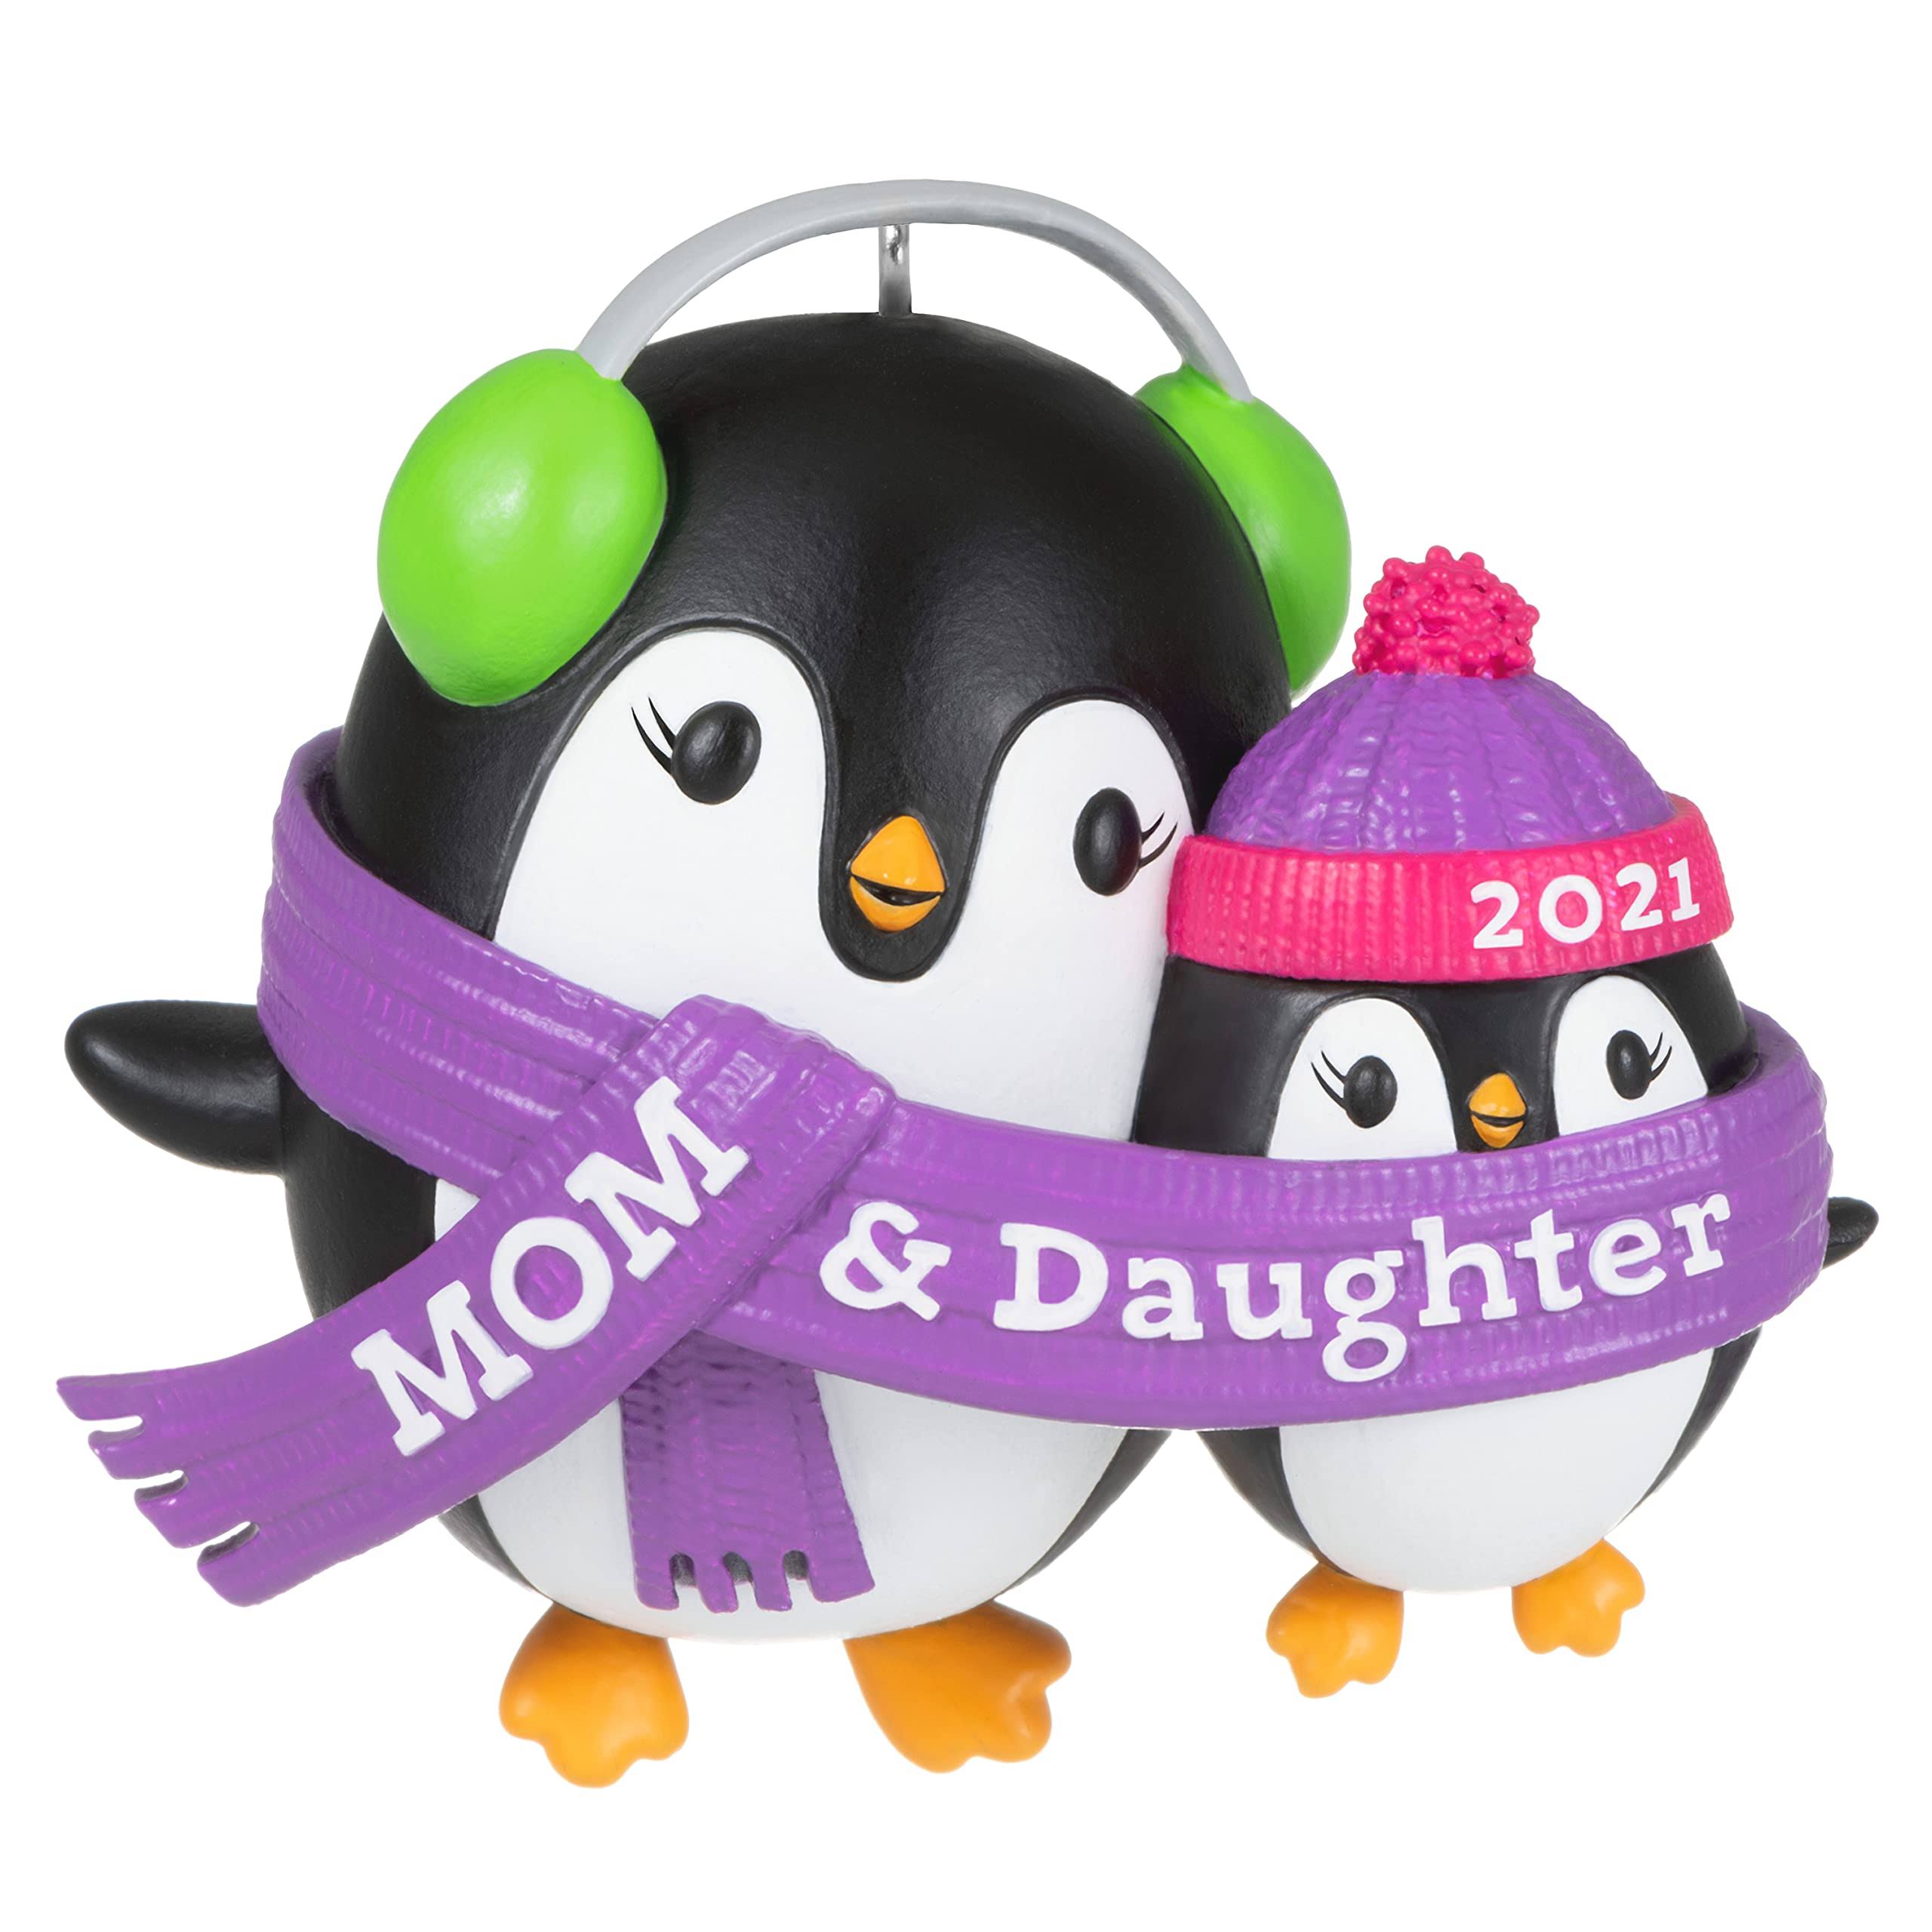 Hallmark Keepsake Christmas Ornament, Year Dated 2021, Mom & Daughter Penguins